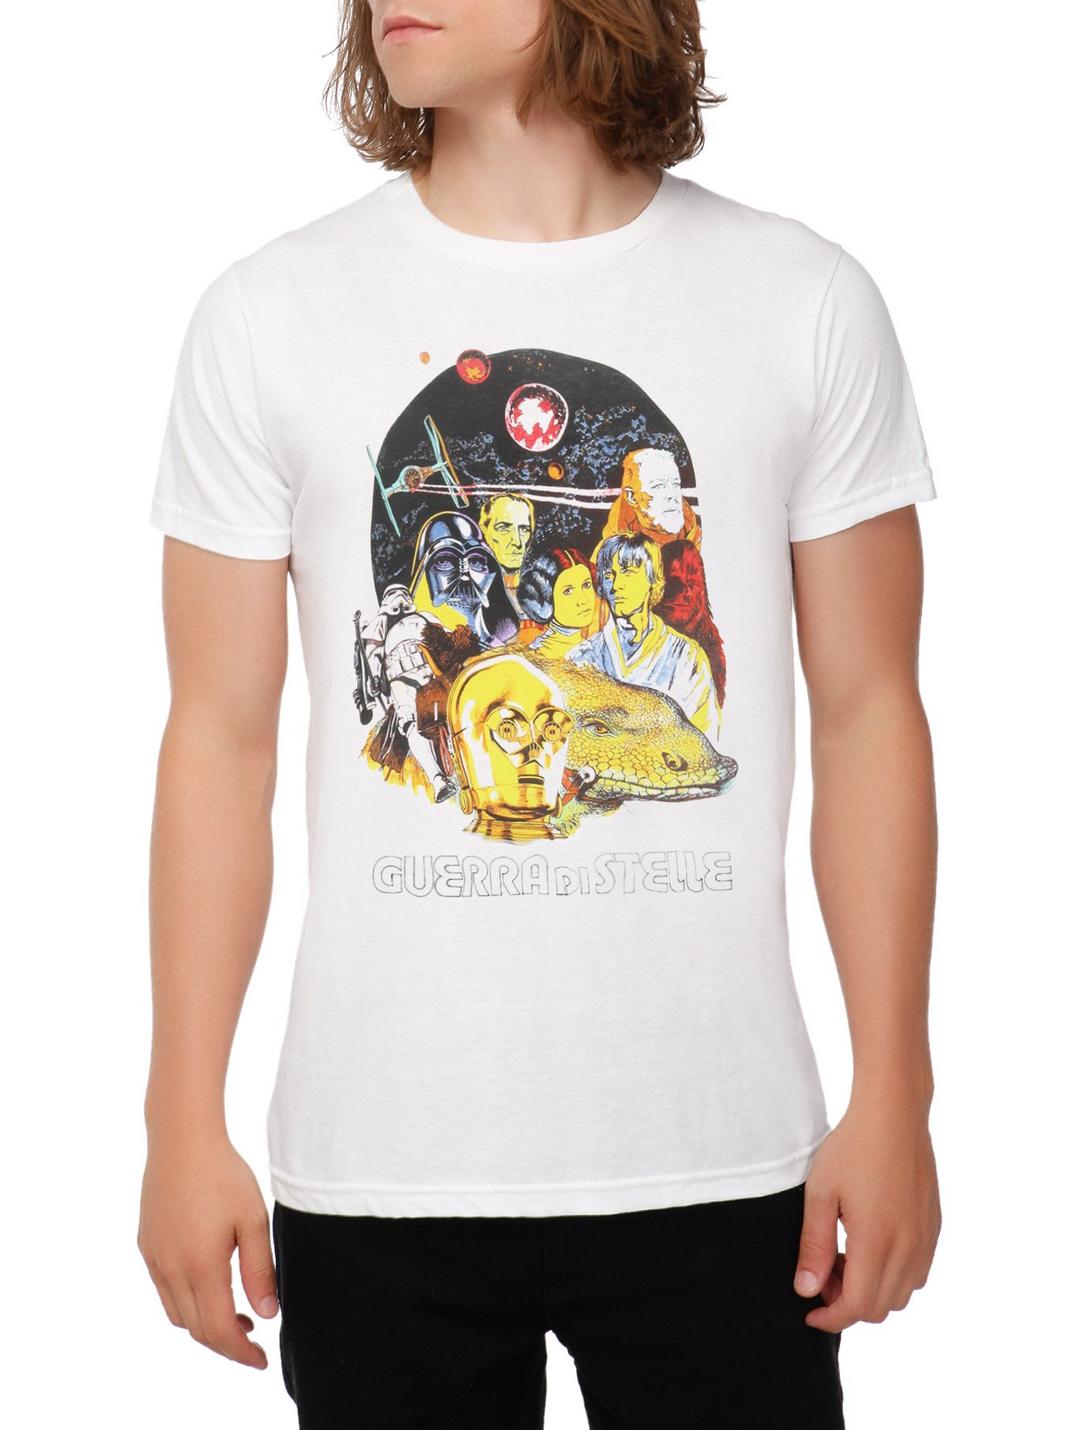 Star Wars Guerra Di Stelle T-Shirt, , hi-res